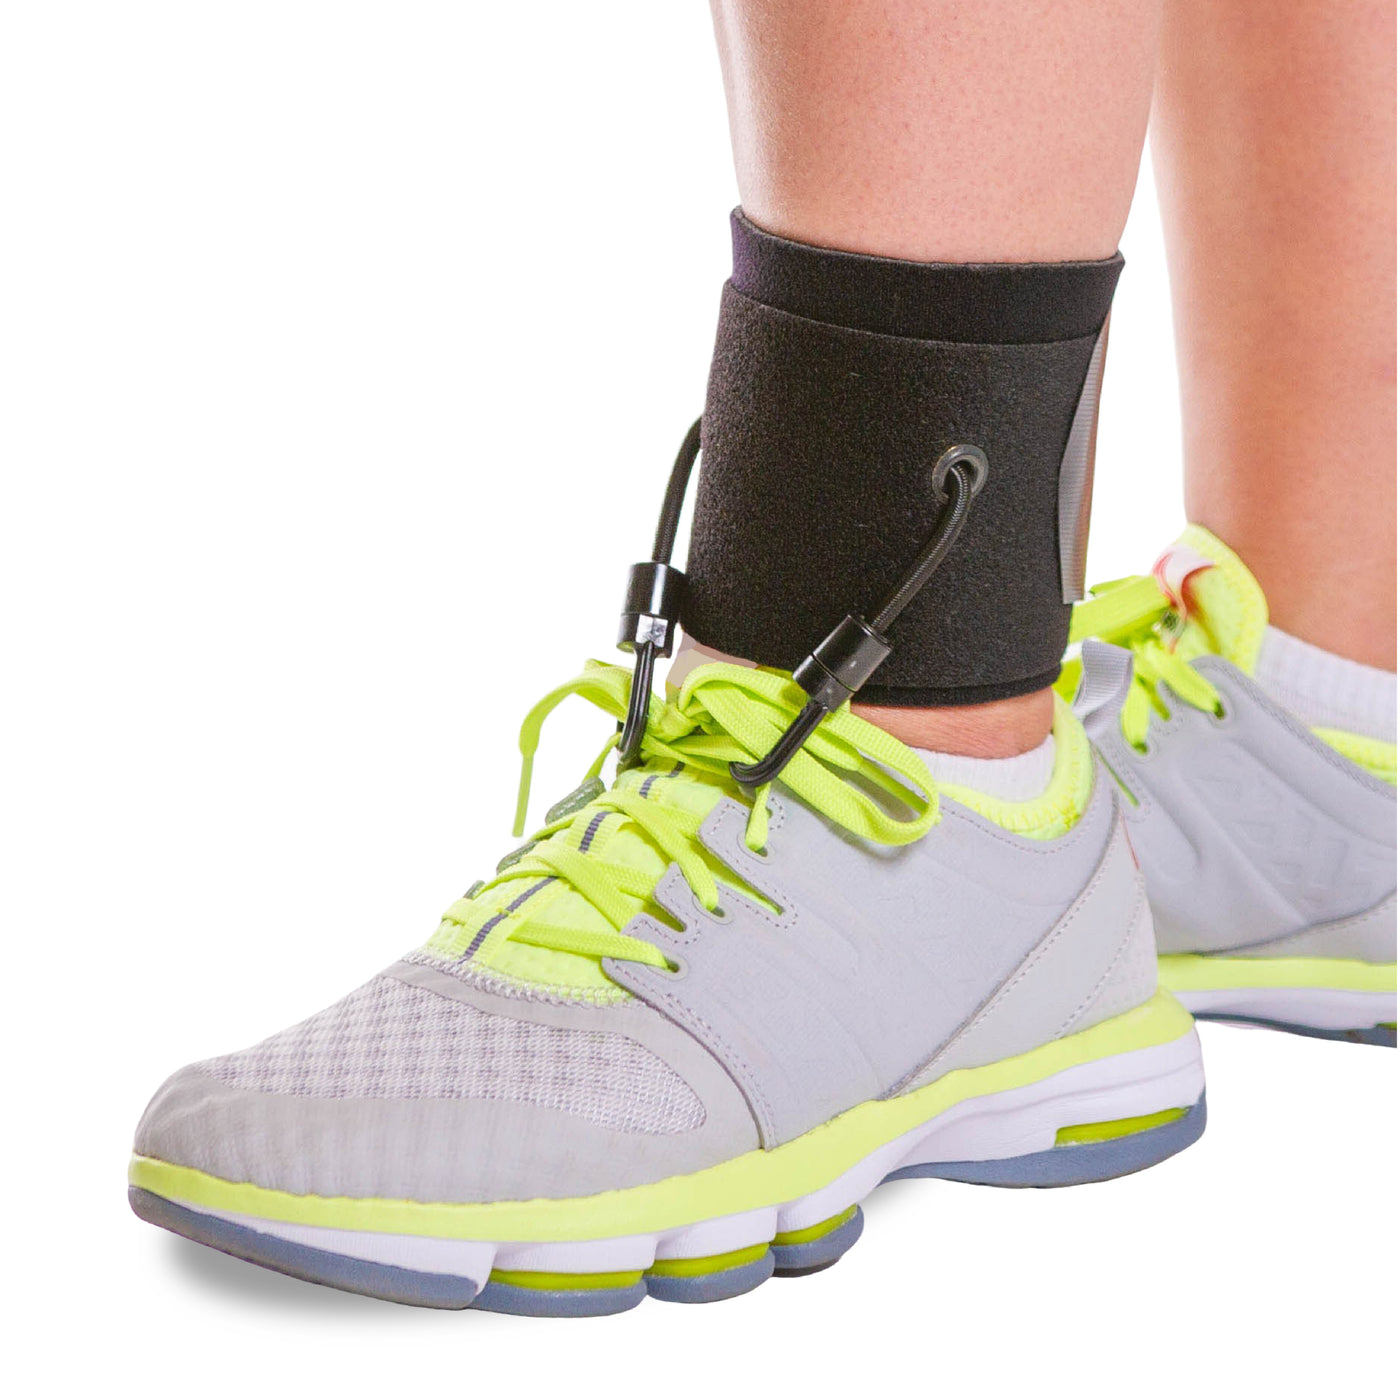 braceability afo drop foot brace with dorsiflexion assist straps while walking